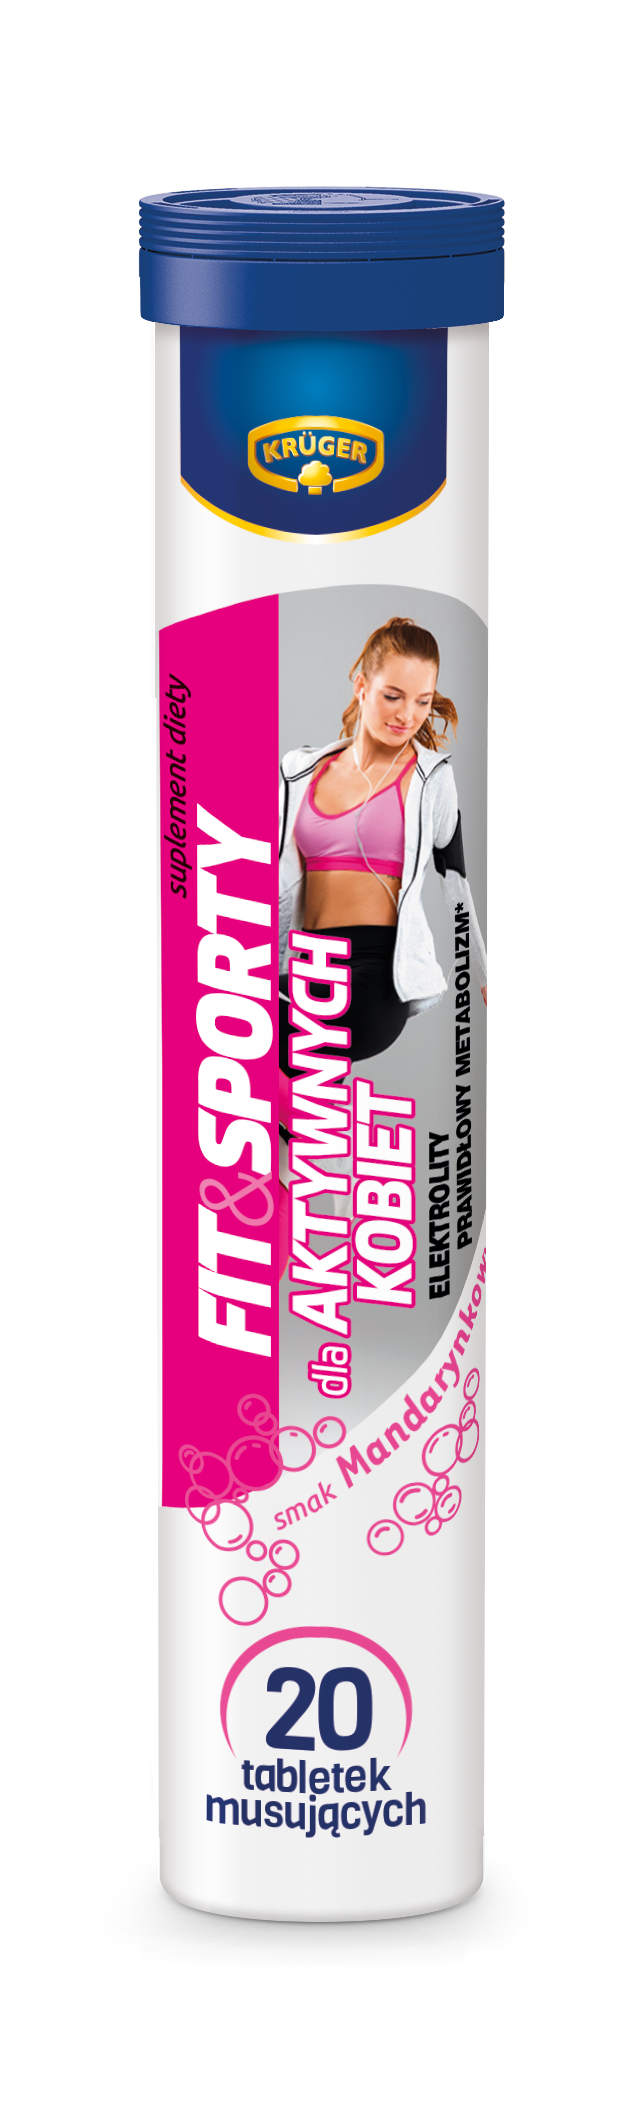 Krüger Fit & Sporty for active women